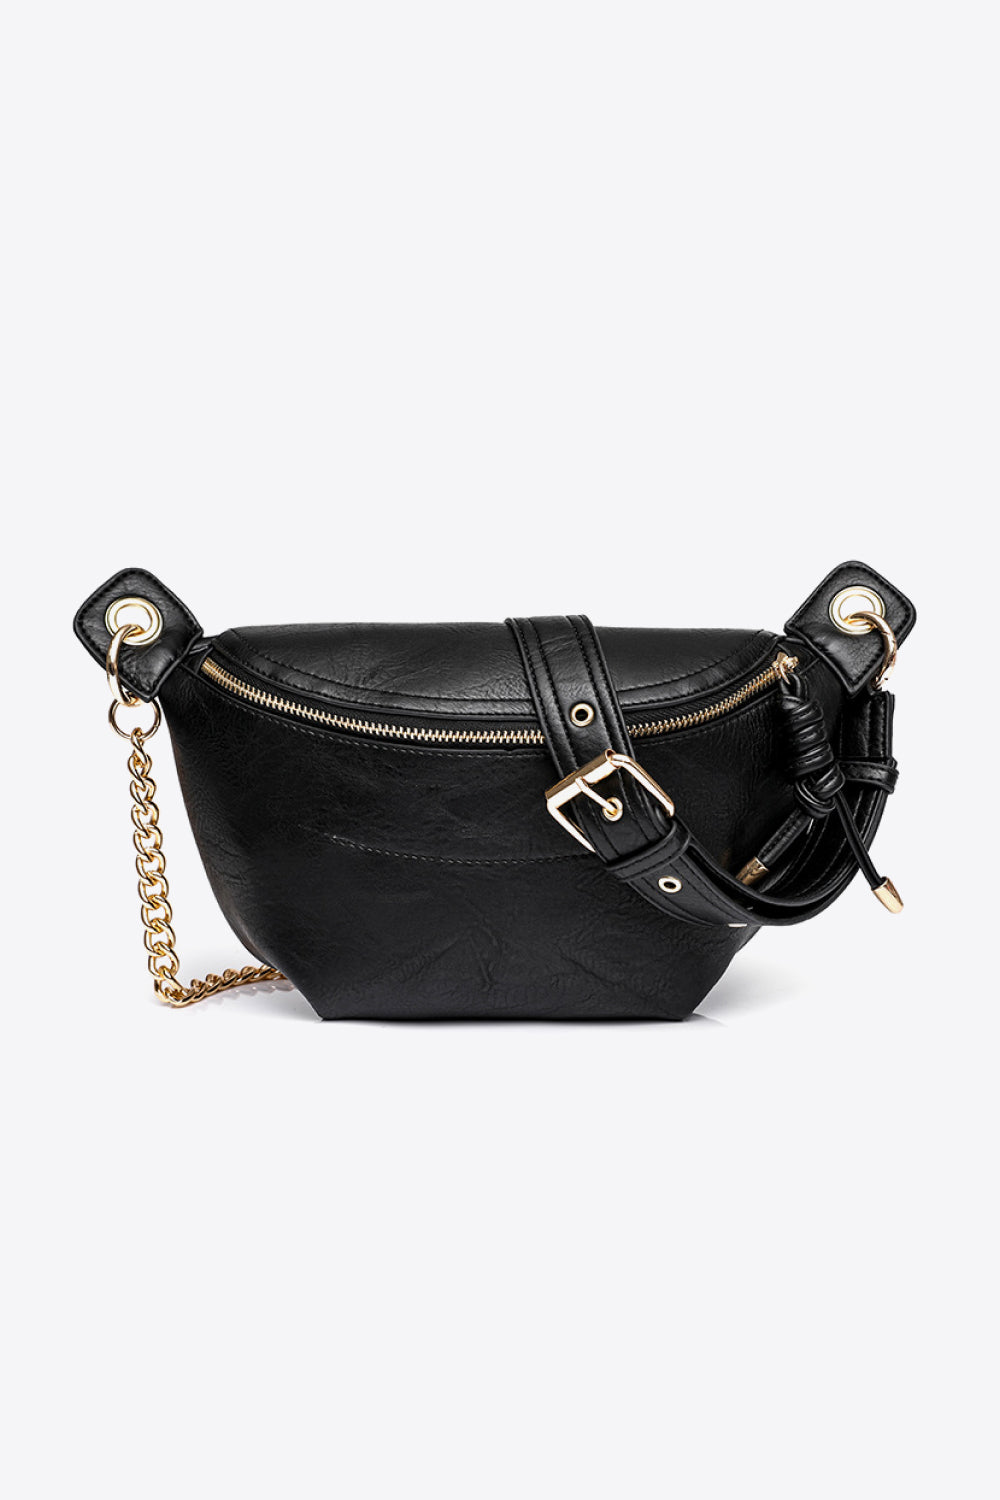 PU Leather Chain Strap Crossbody Bag Black One Size